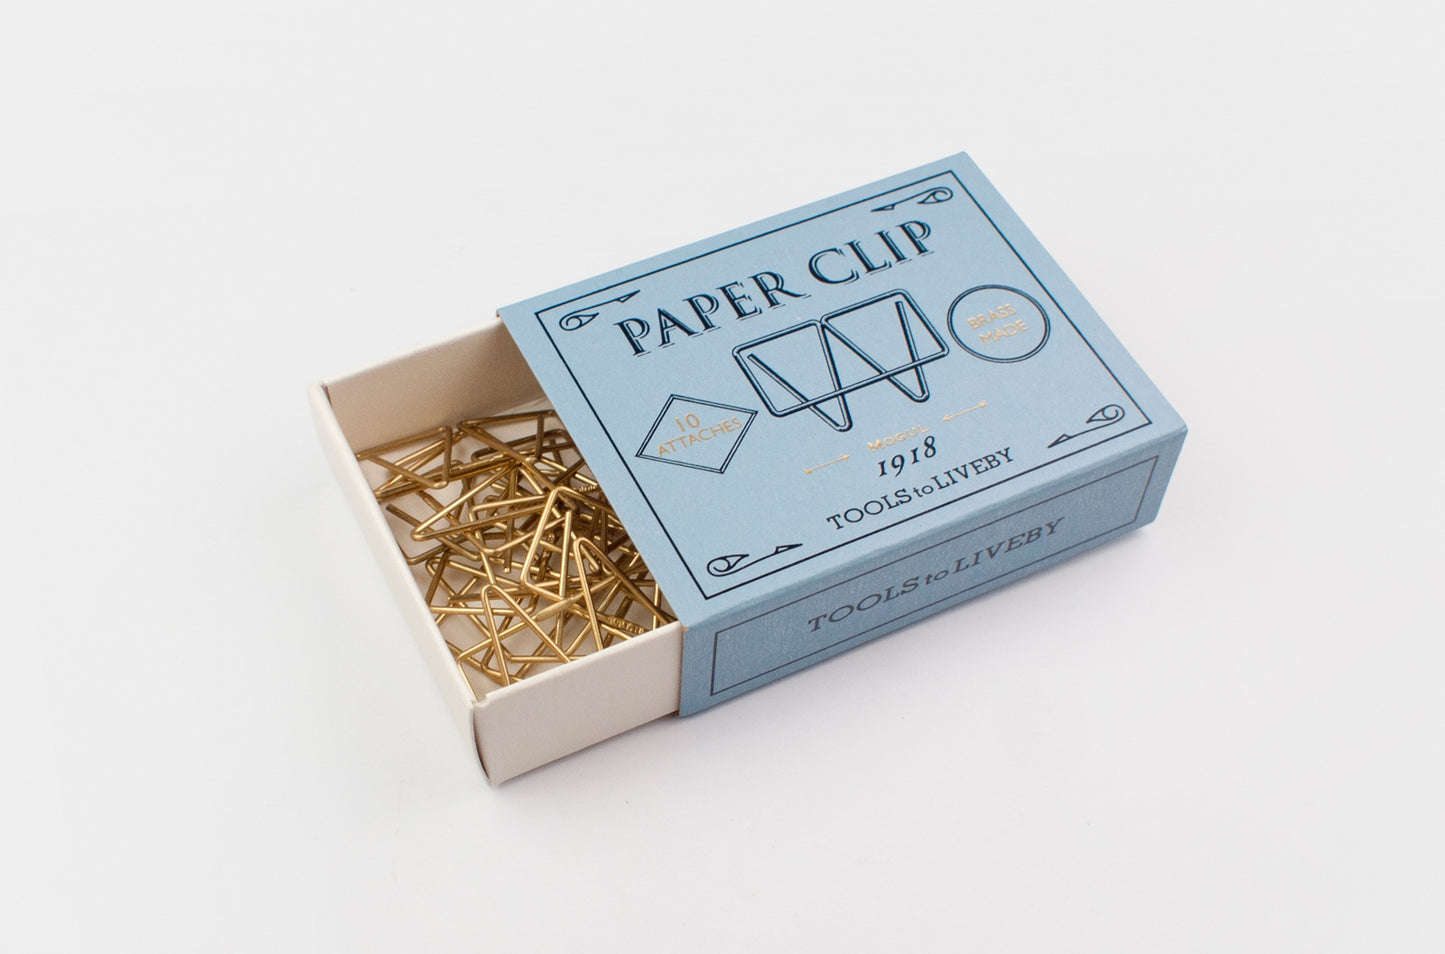 Mogul - Brass Paper Clips